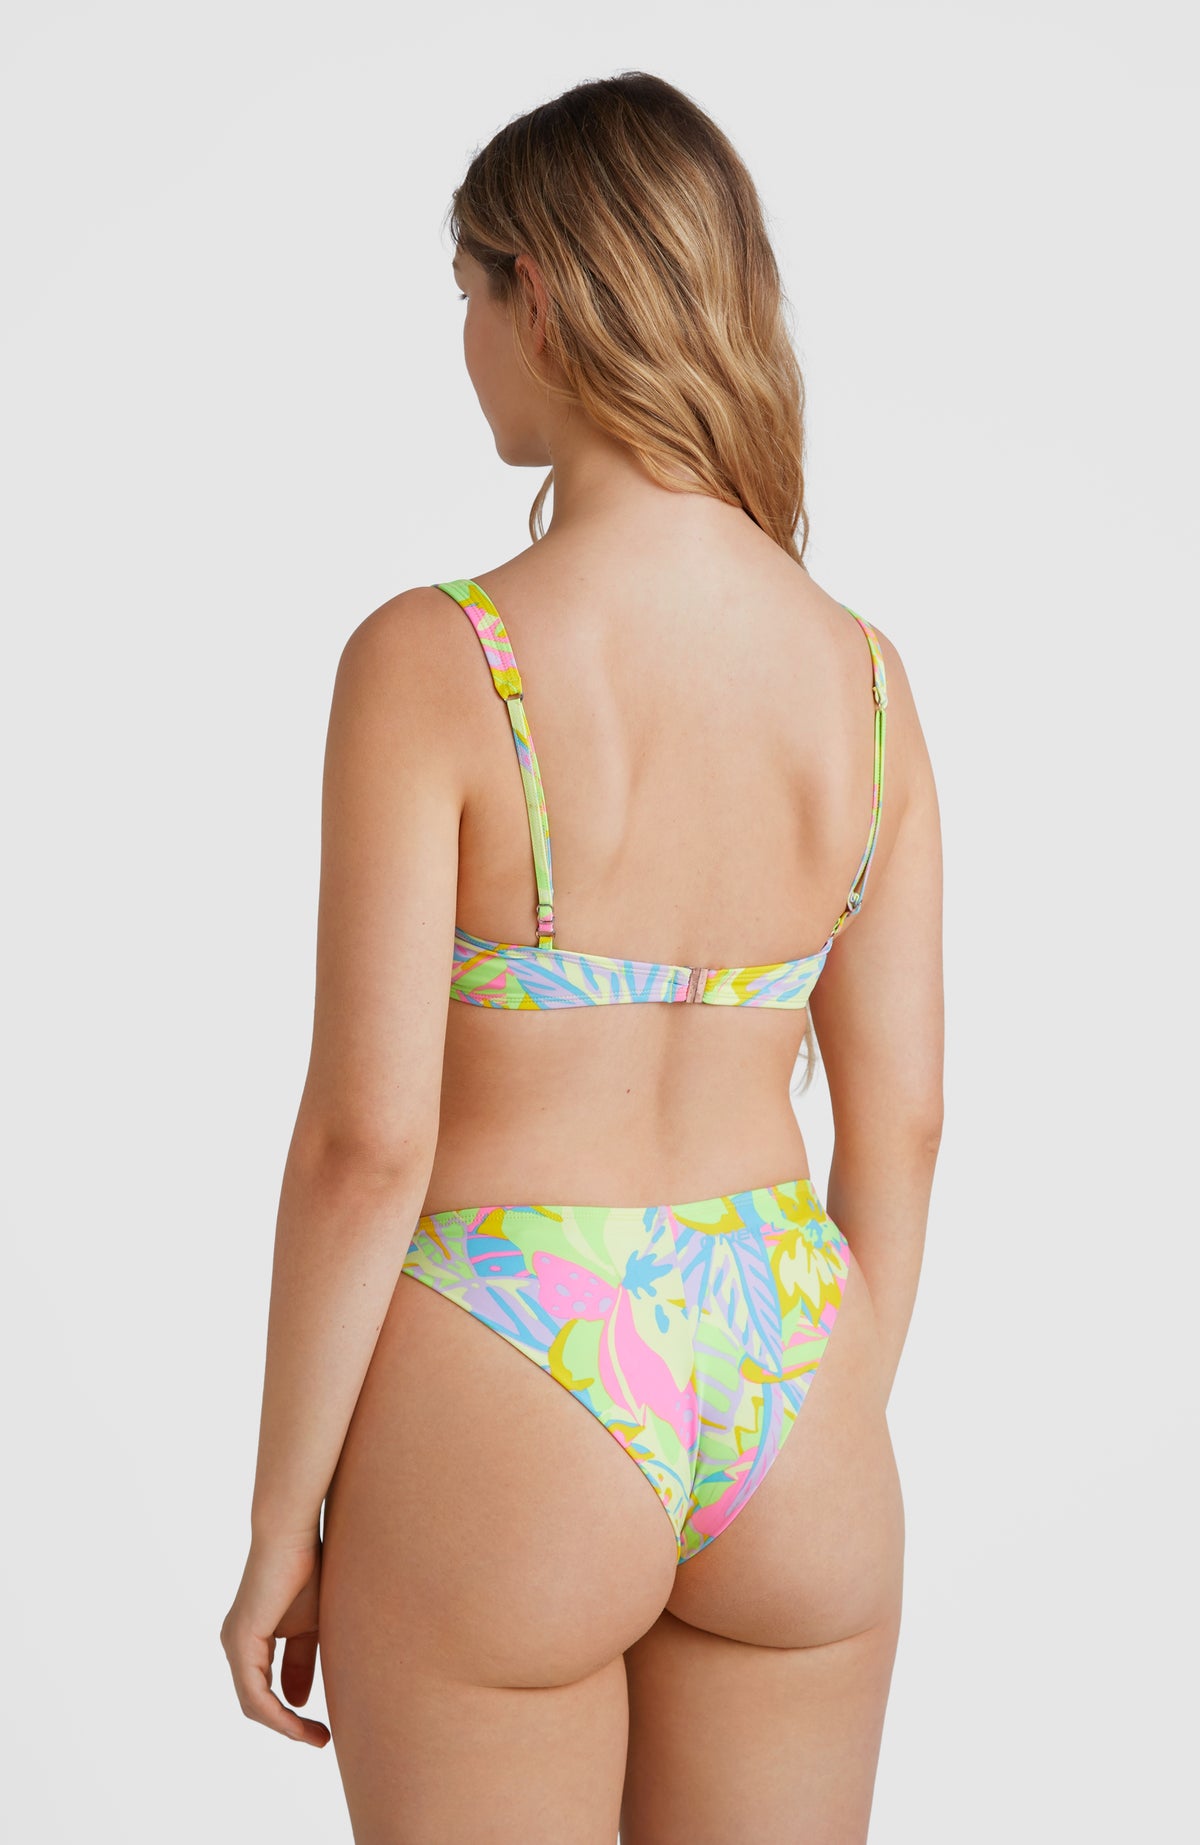 Buy Tropical Summer Bikini for Women Online in India